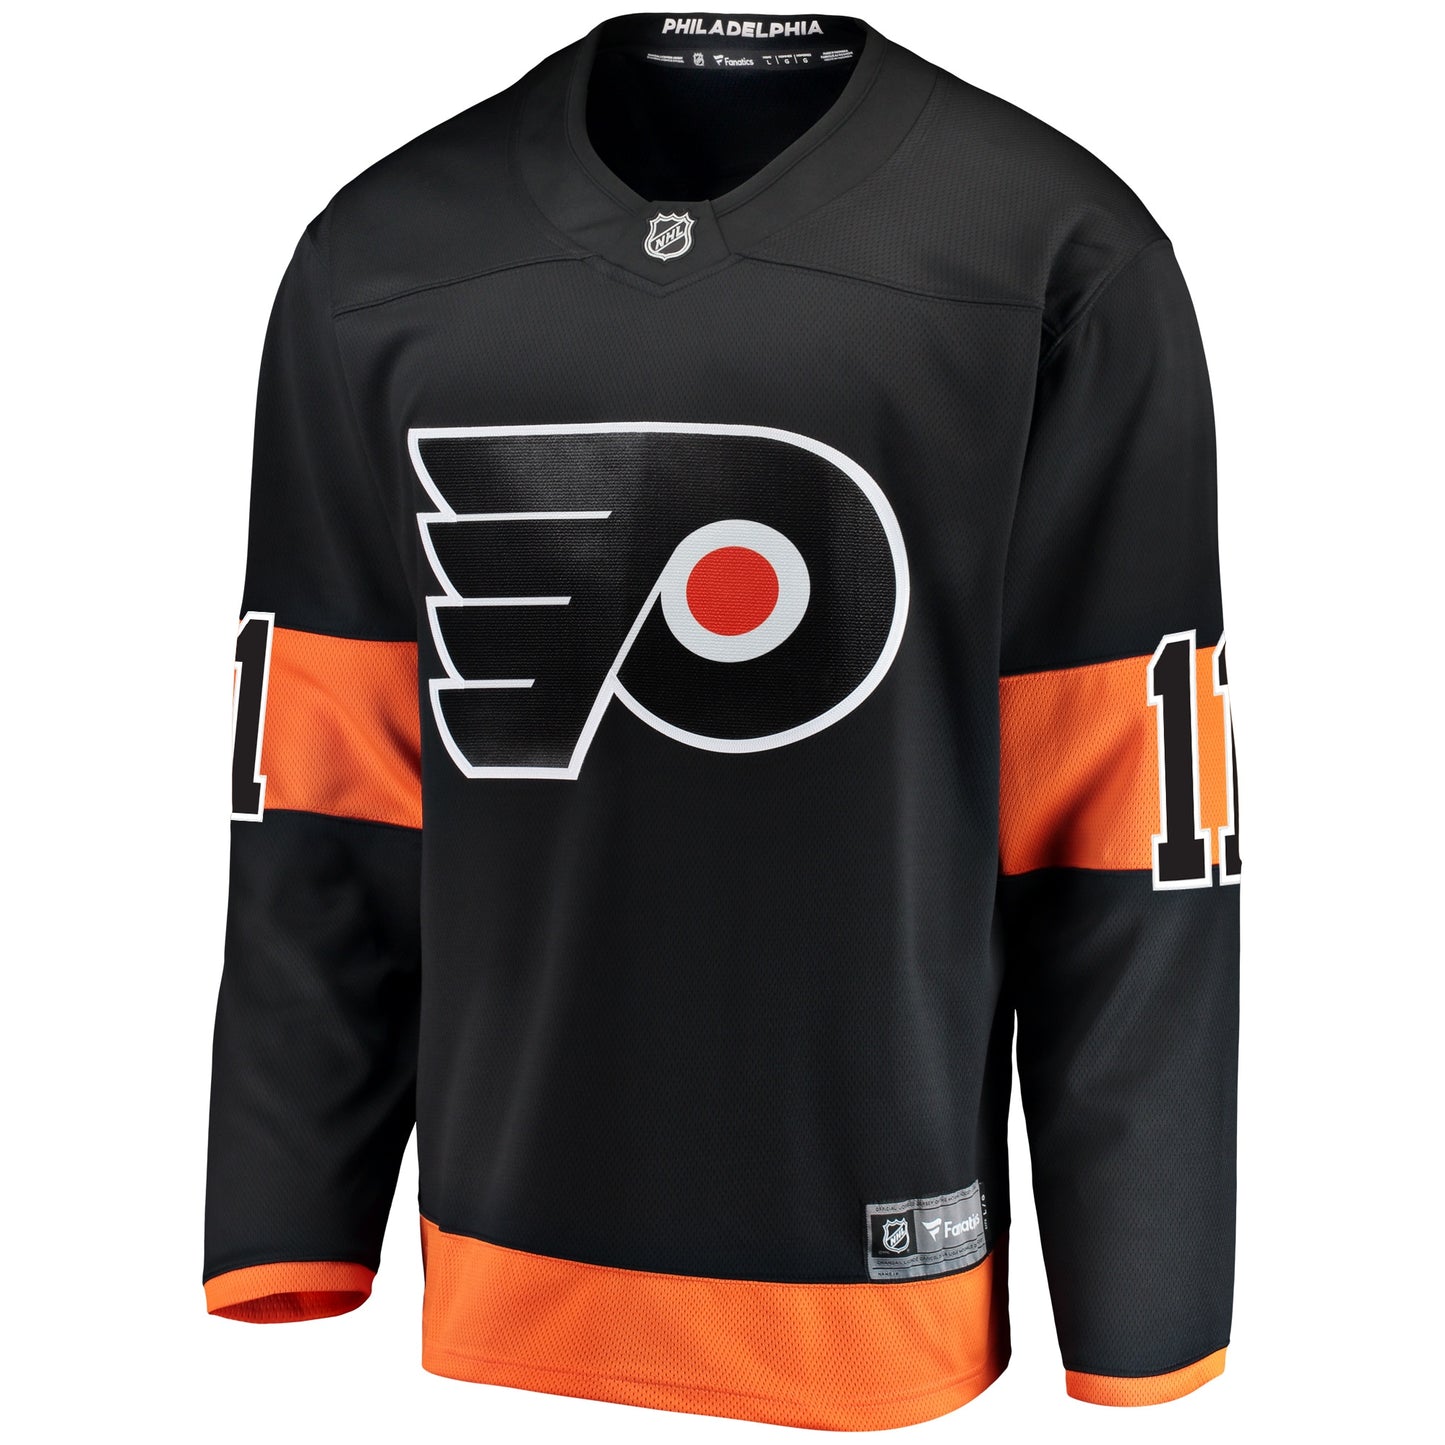 Travis Konecny Philadelphia Flyers Fanatics Branded Alternate Breakaway Player Jersey - Black